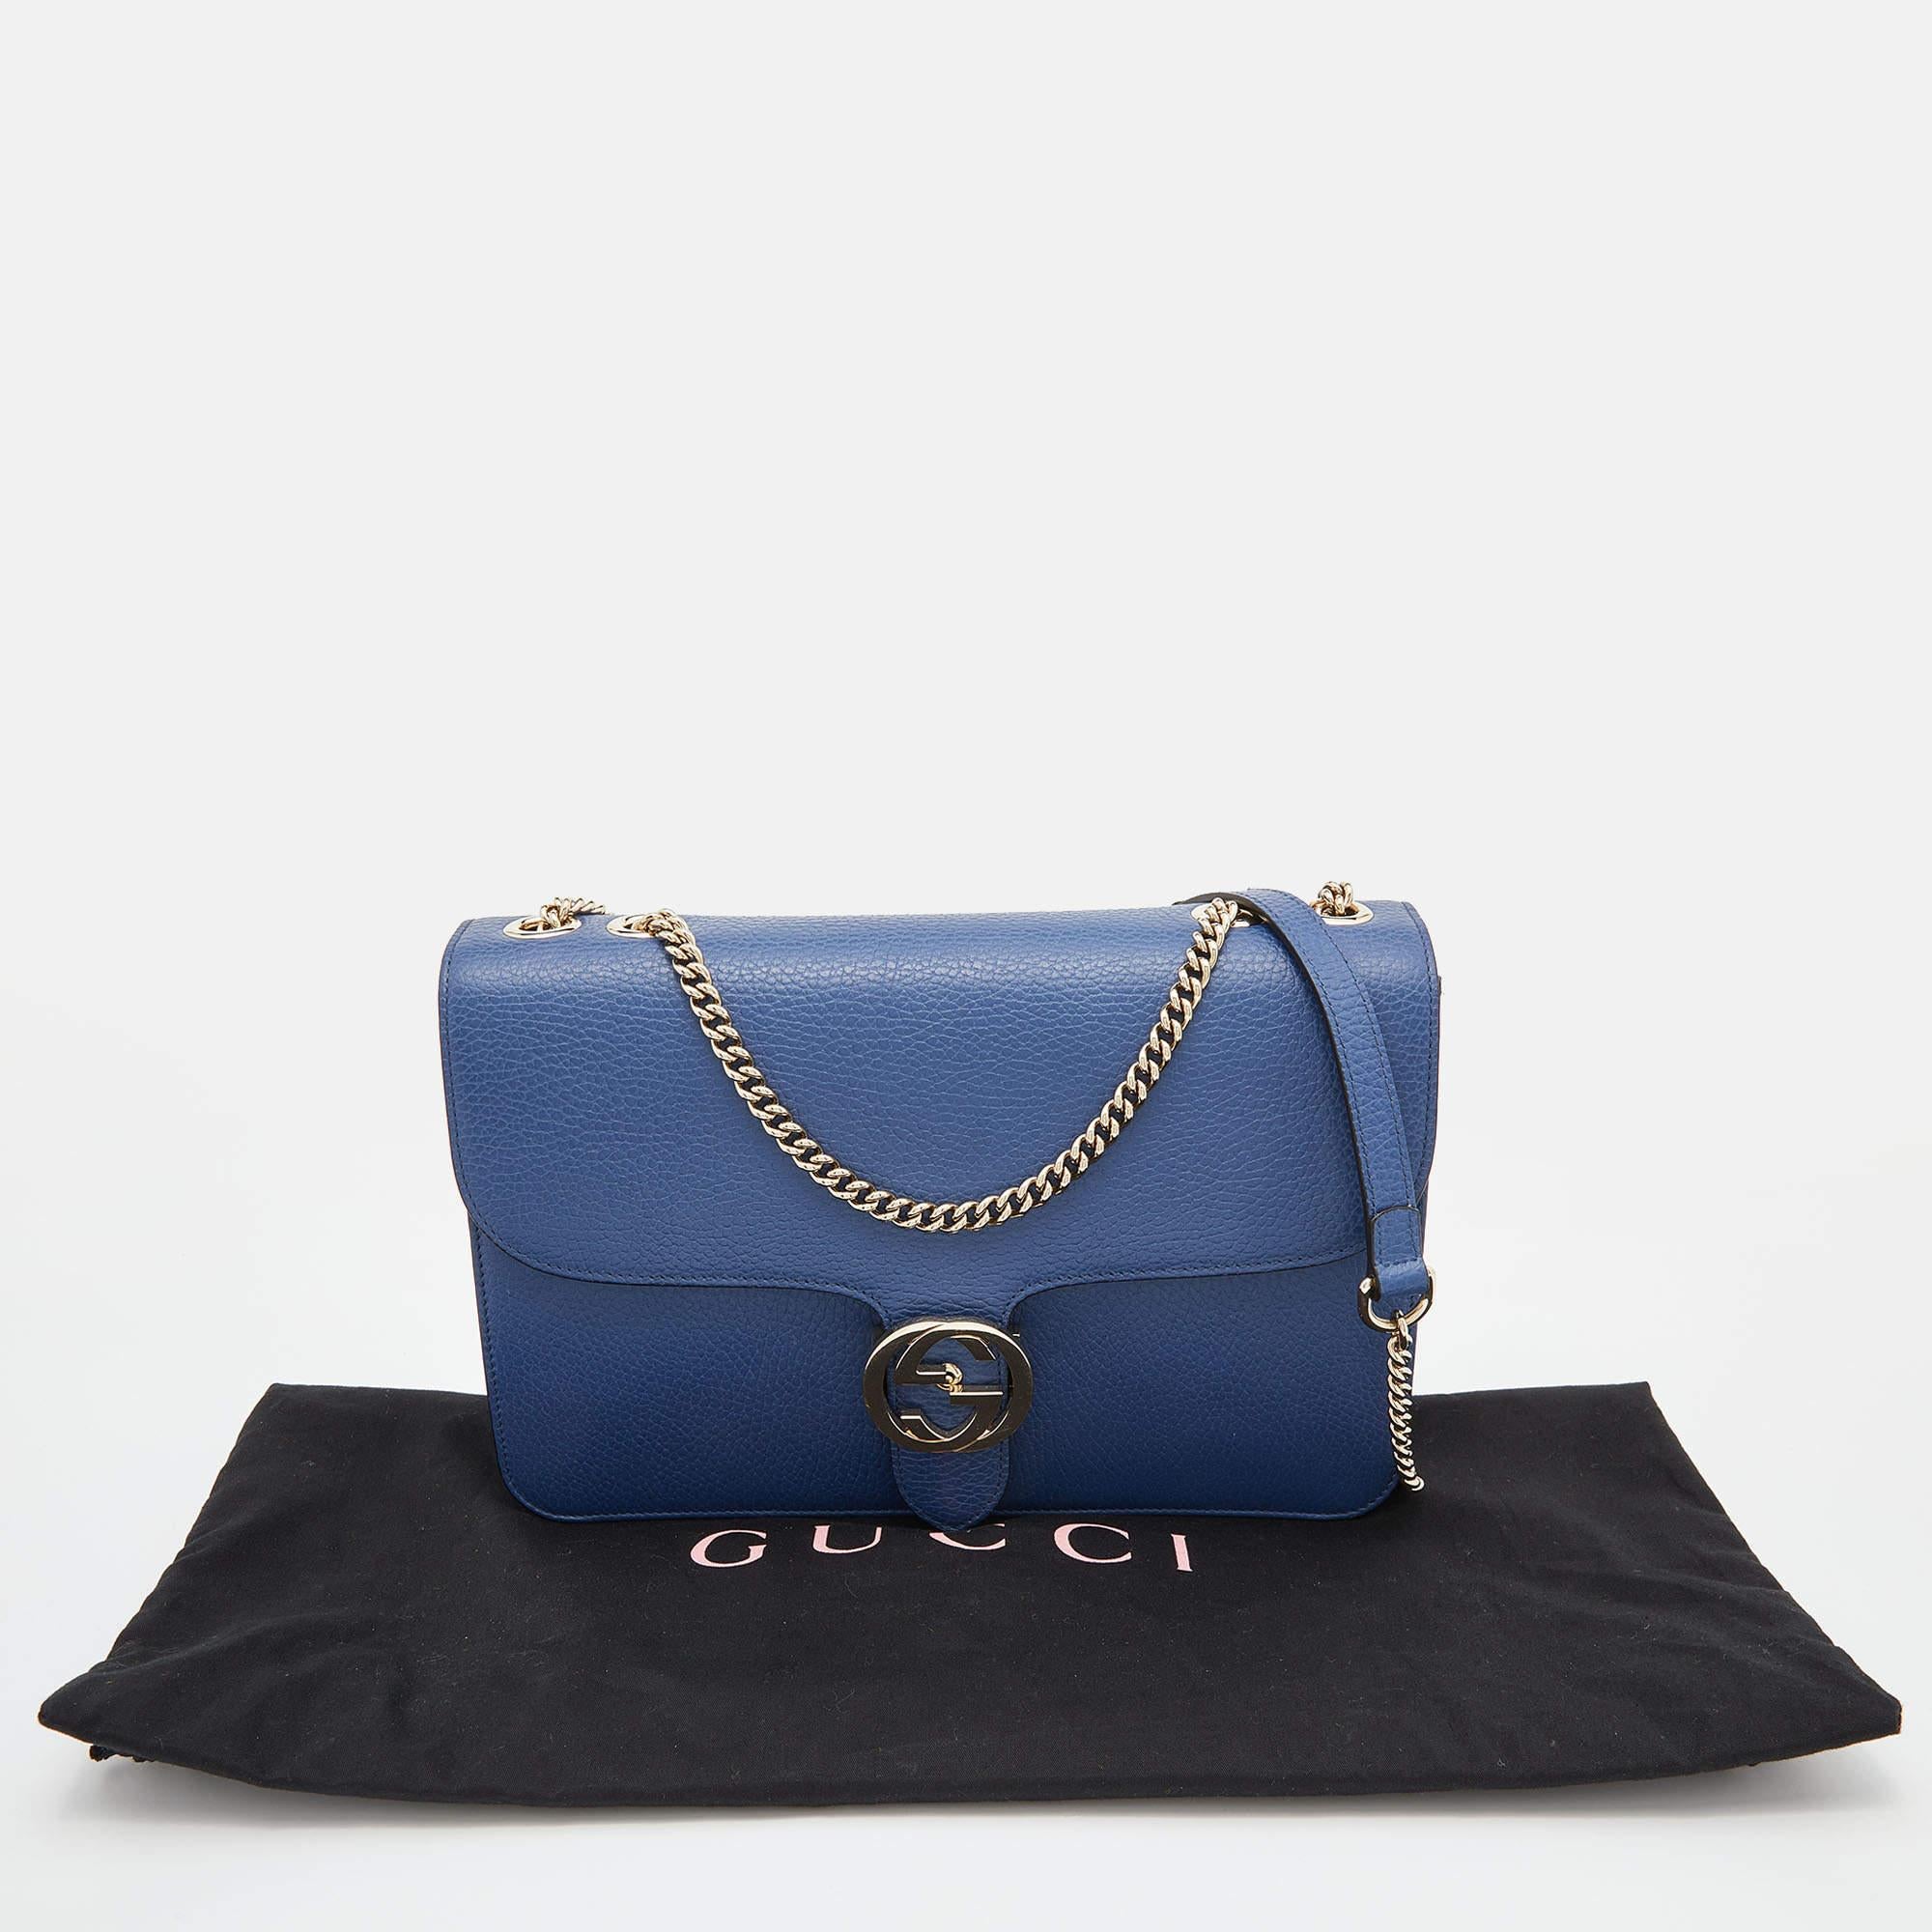 Gucci Blue Leather Medium Interlocking G Shoulder Bag 5